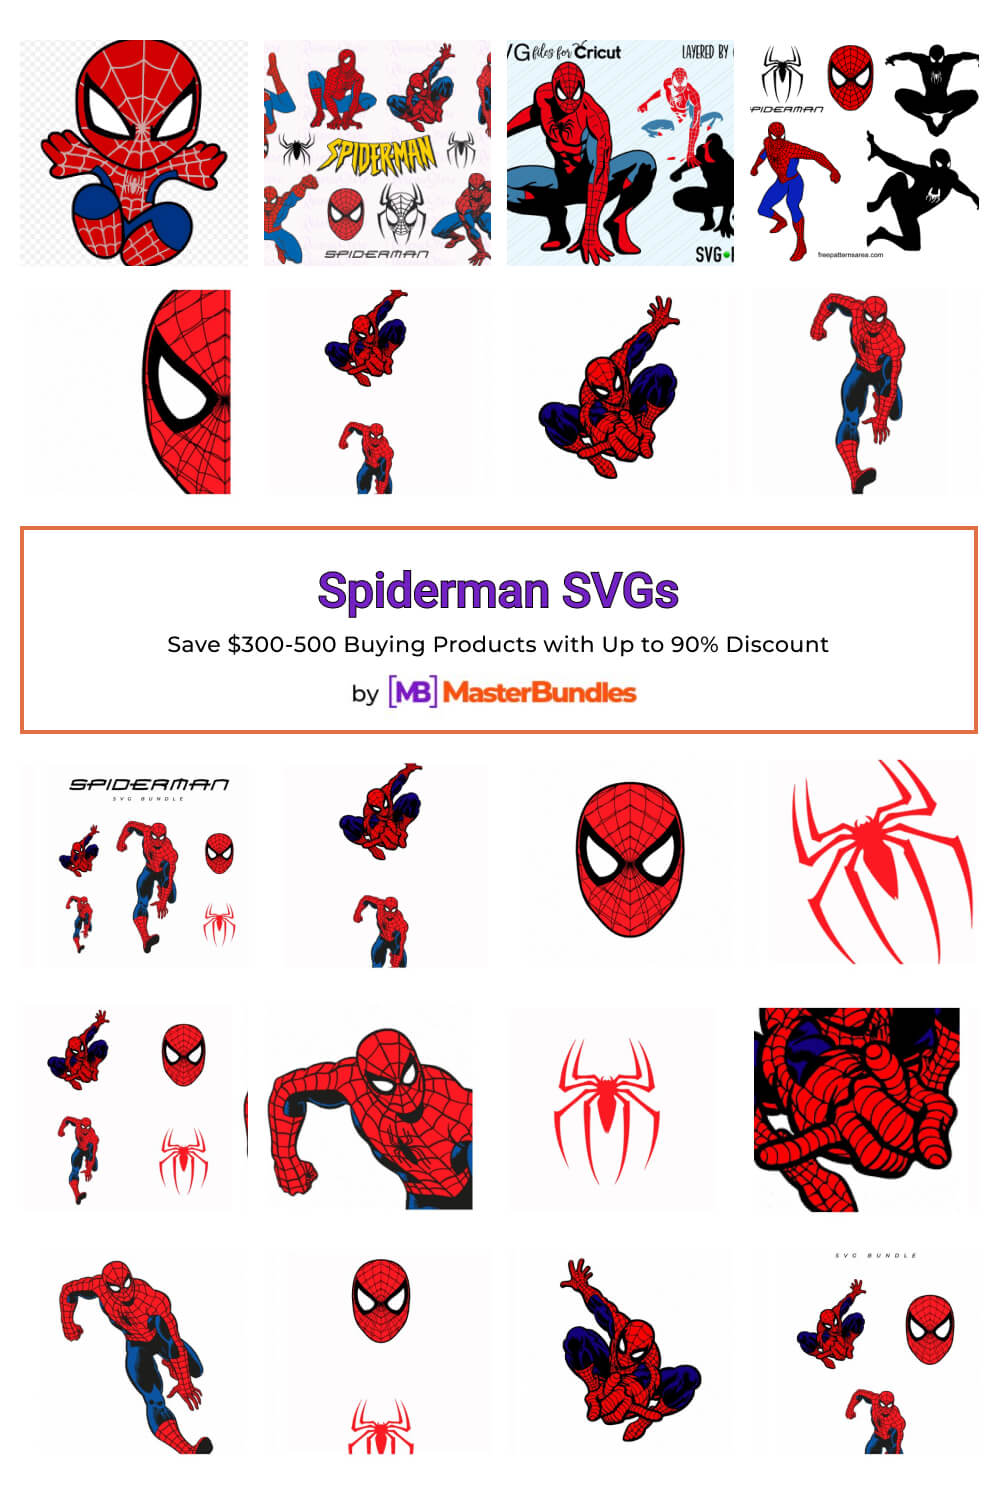 spiderman svgs pinterest image.